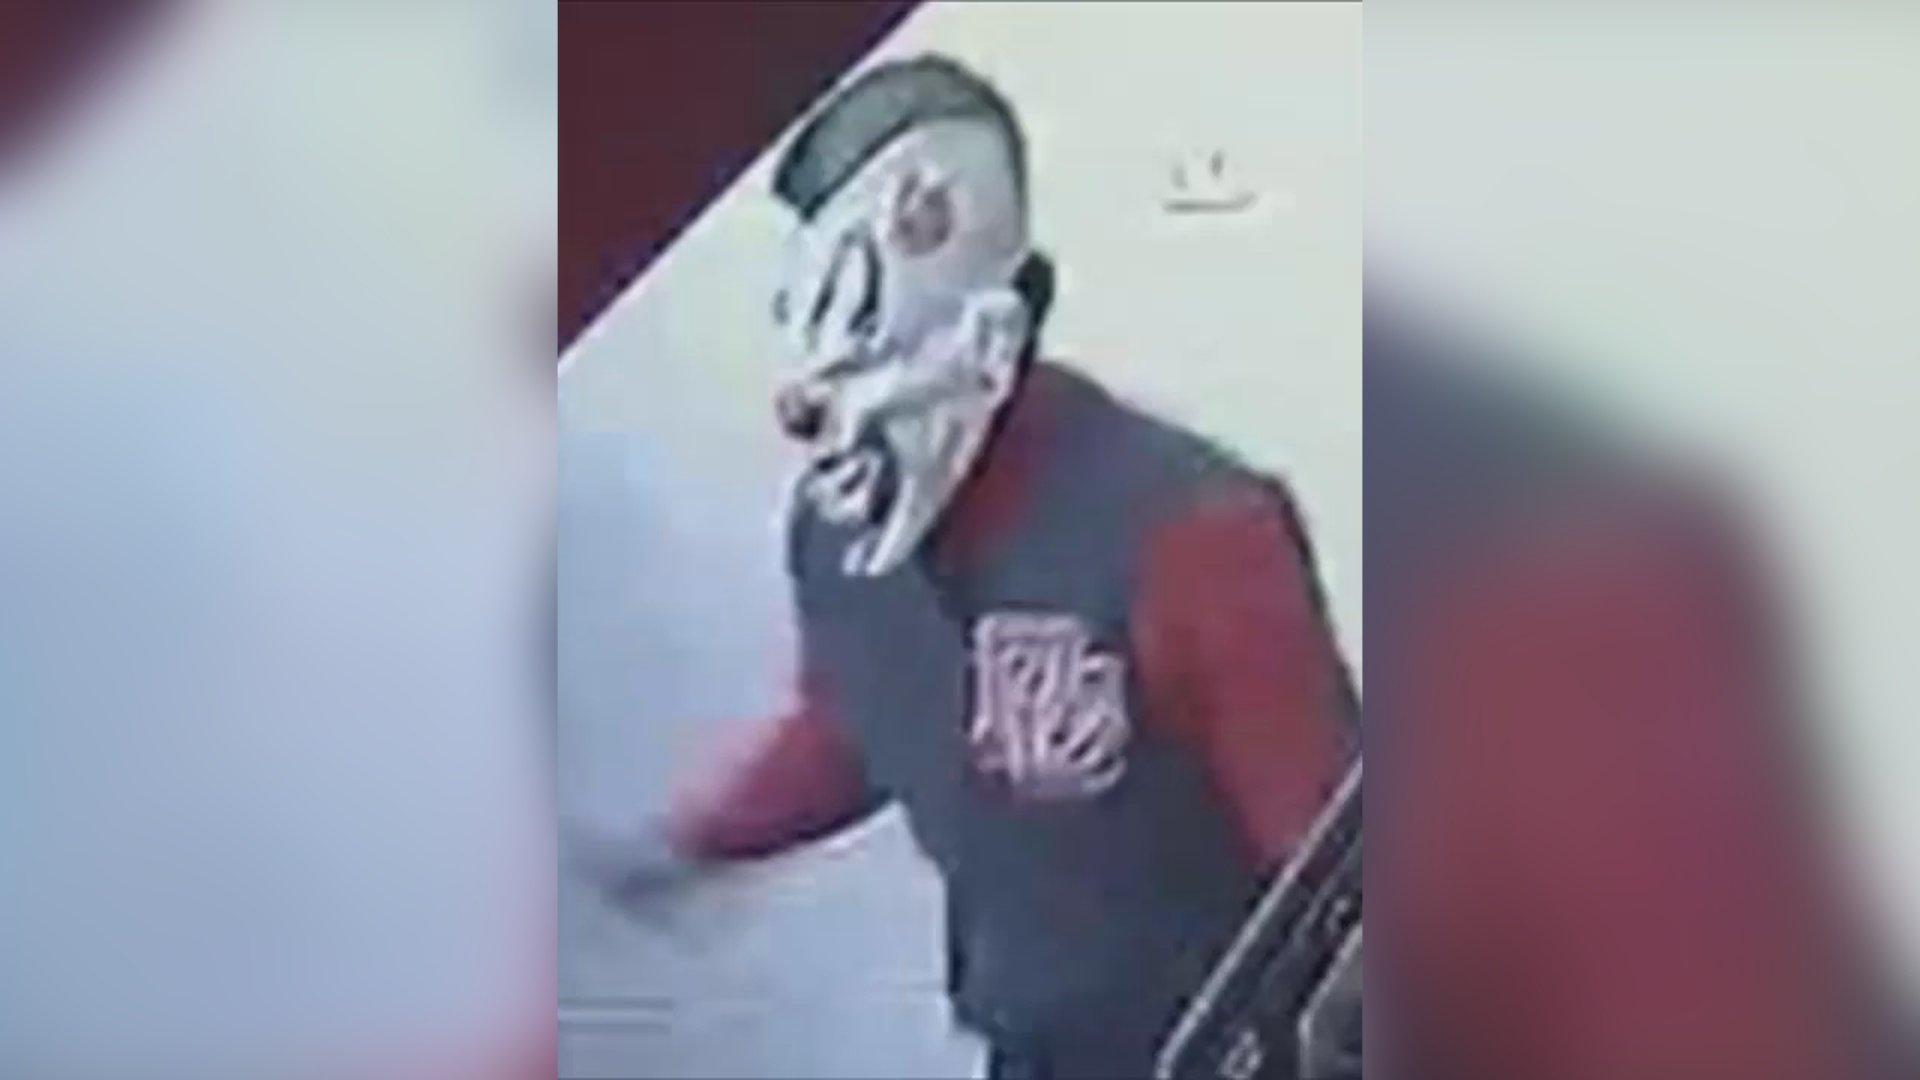 Clown mask crimes: Arizona teens latest fast food restaurant robberies - National | Globalnews.ca